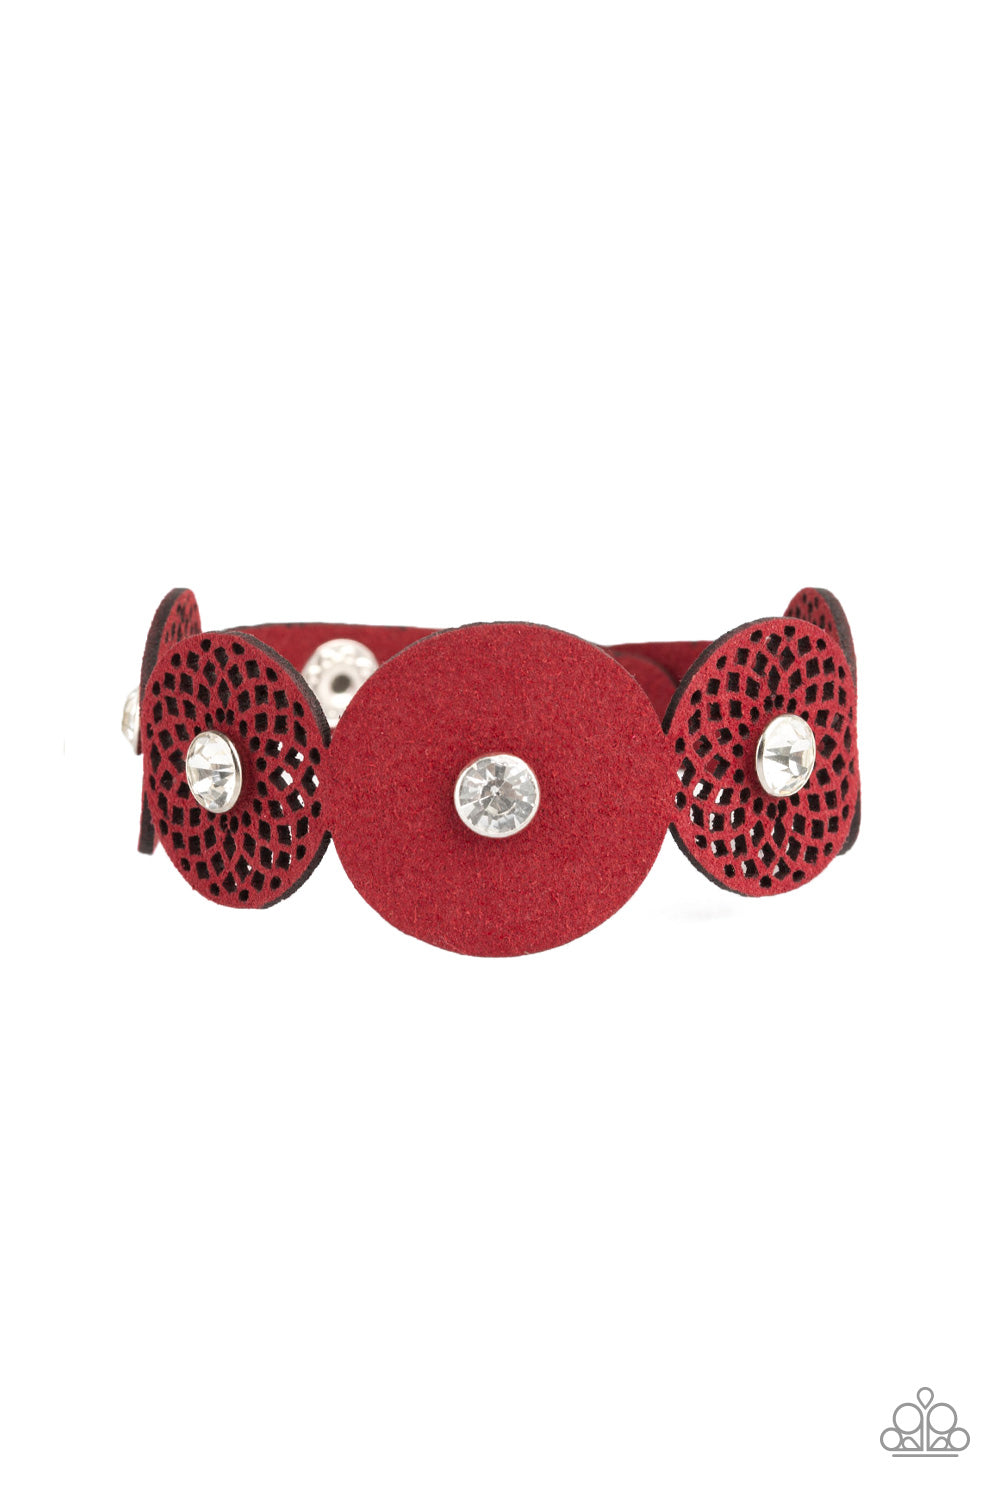 . Poppin Popstar - Red Bracelet (wrap)